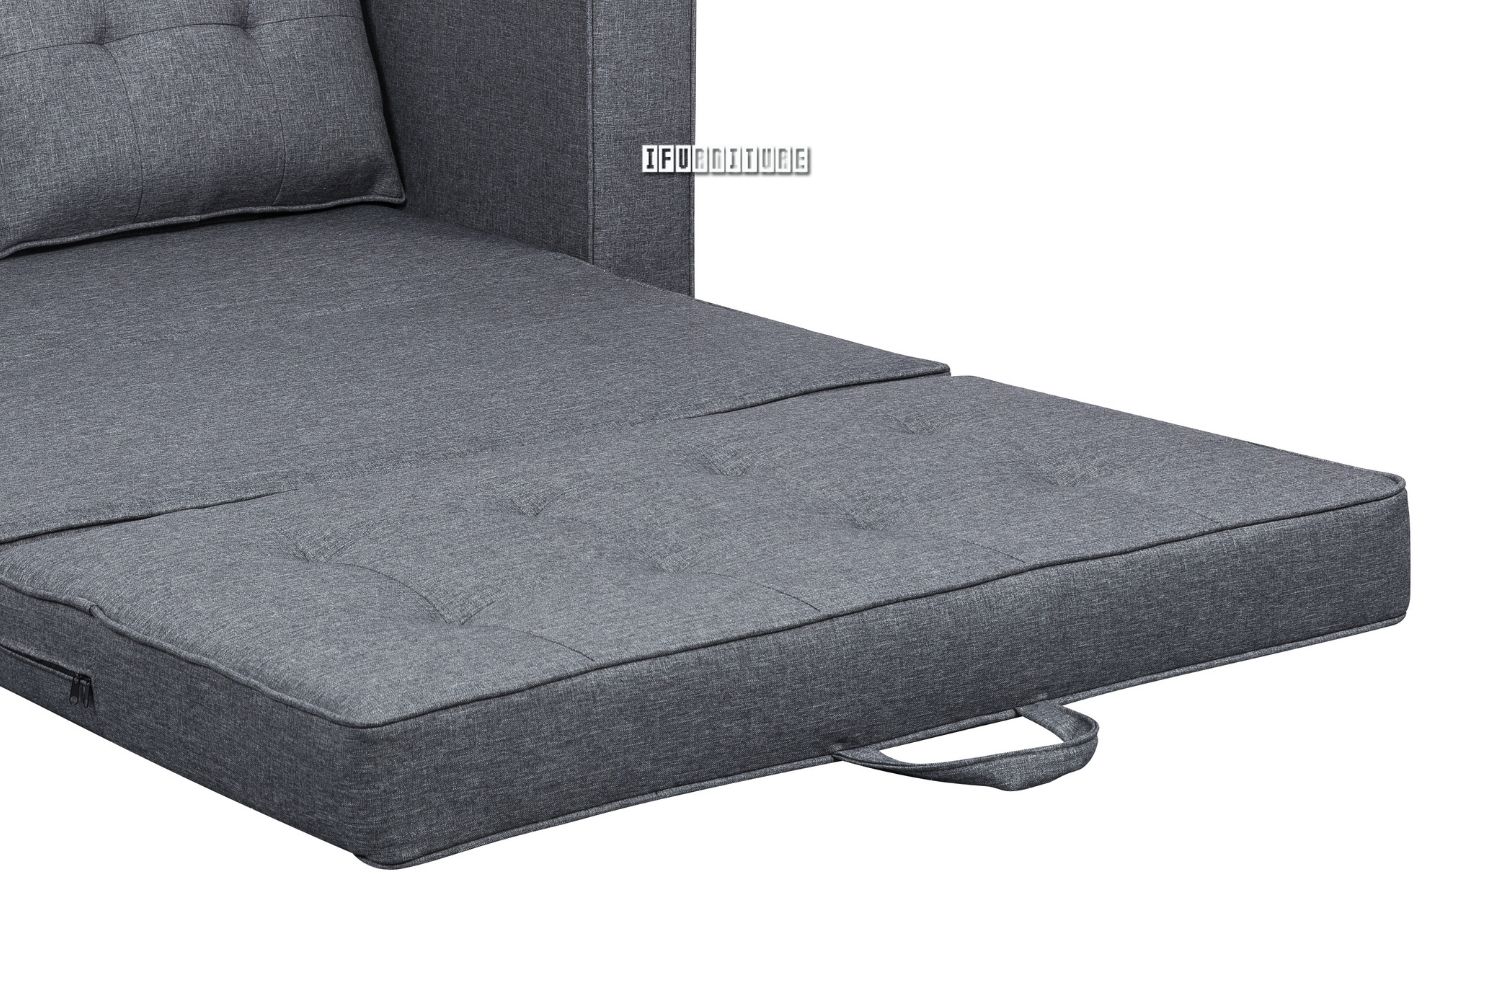 AZURE Foldout Sofa Bed (Grey)